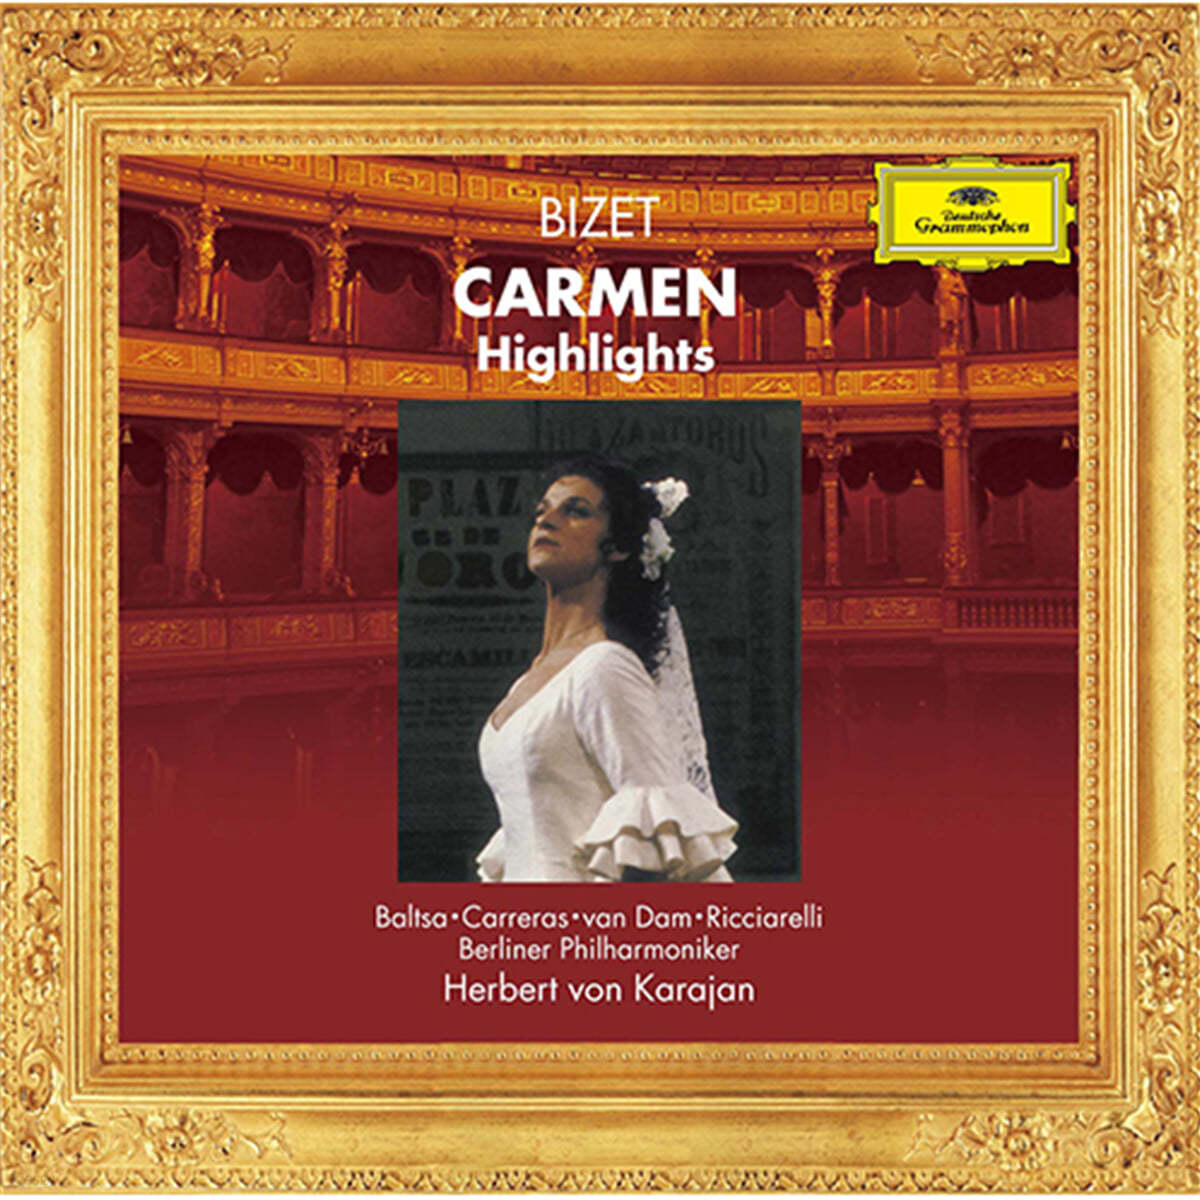 Herbert von Karajan 비제: 오페라 `카르멘` 하이라이트 (Bizet: Carmen highlight)